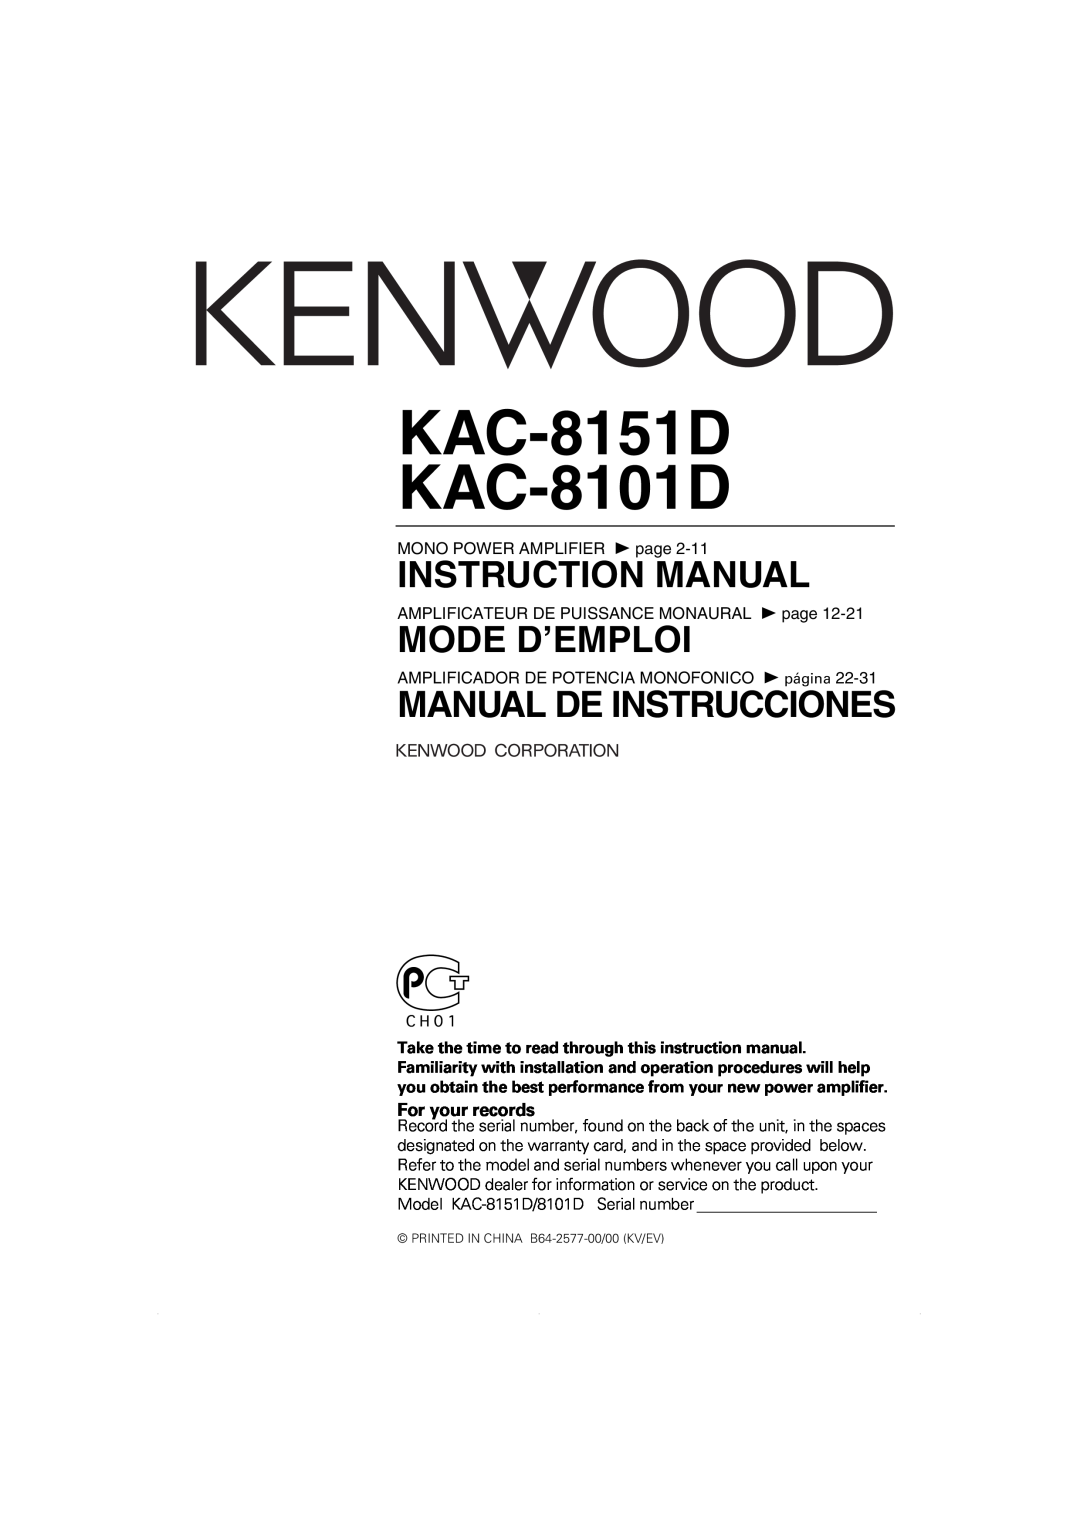 Kenwood instruction manual For your records, KAC-8151D KAC-8101D, Mode D’Emploi, Manual De Instrucciones 